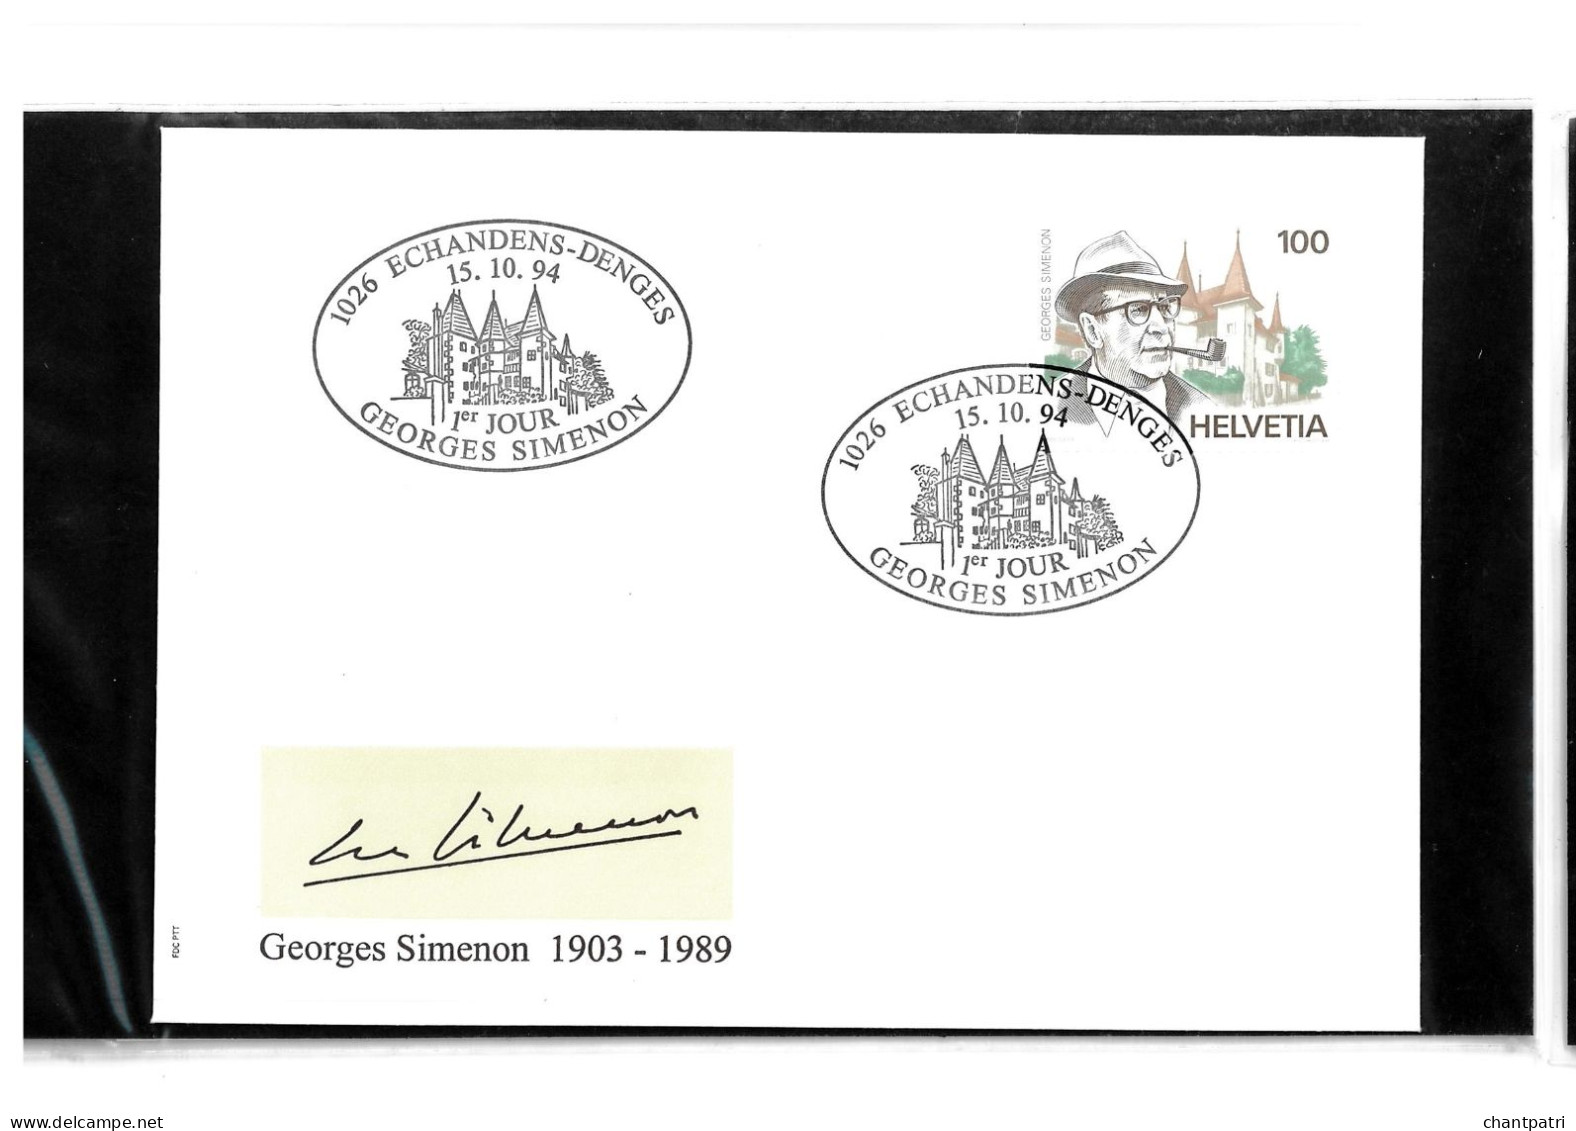 1026 Echandens Denges - 1er Jour Georges Simenon - 15 10 1994 - Beli FDC 117 - Storia Postale